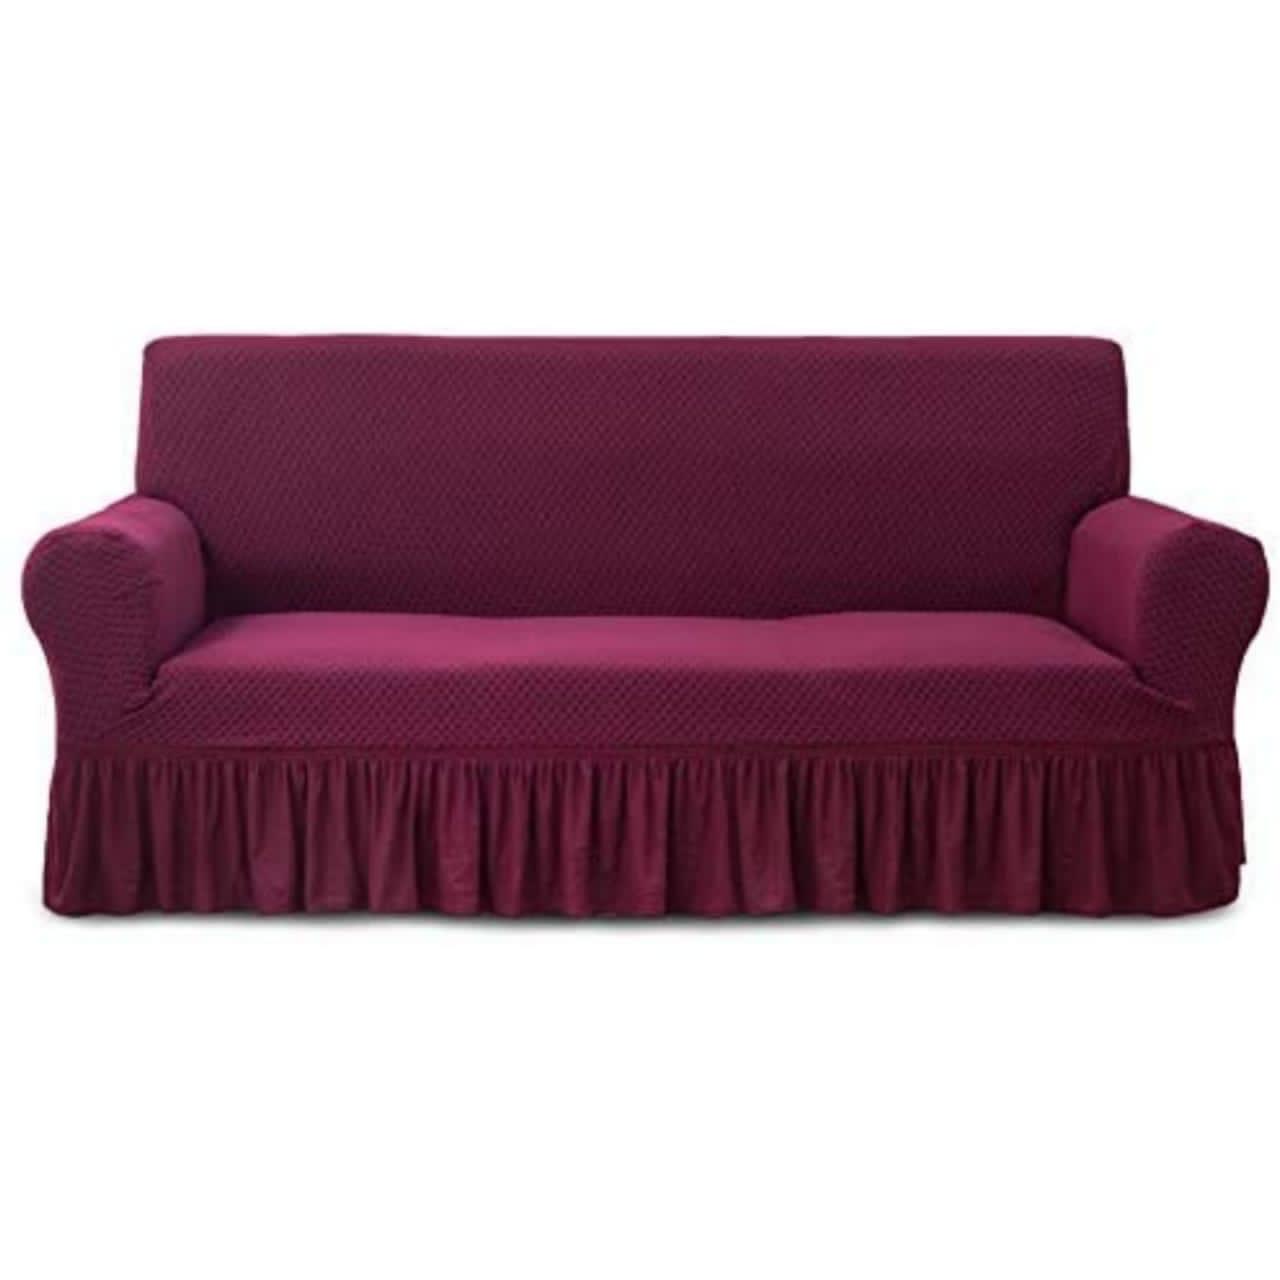 Turkish Style Sofa cover set (MAROON)